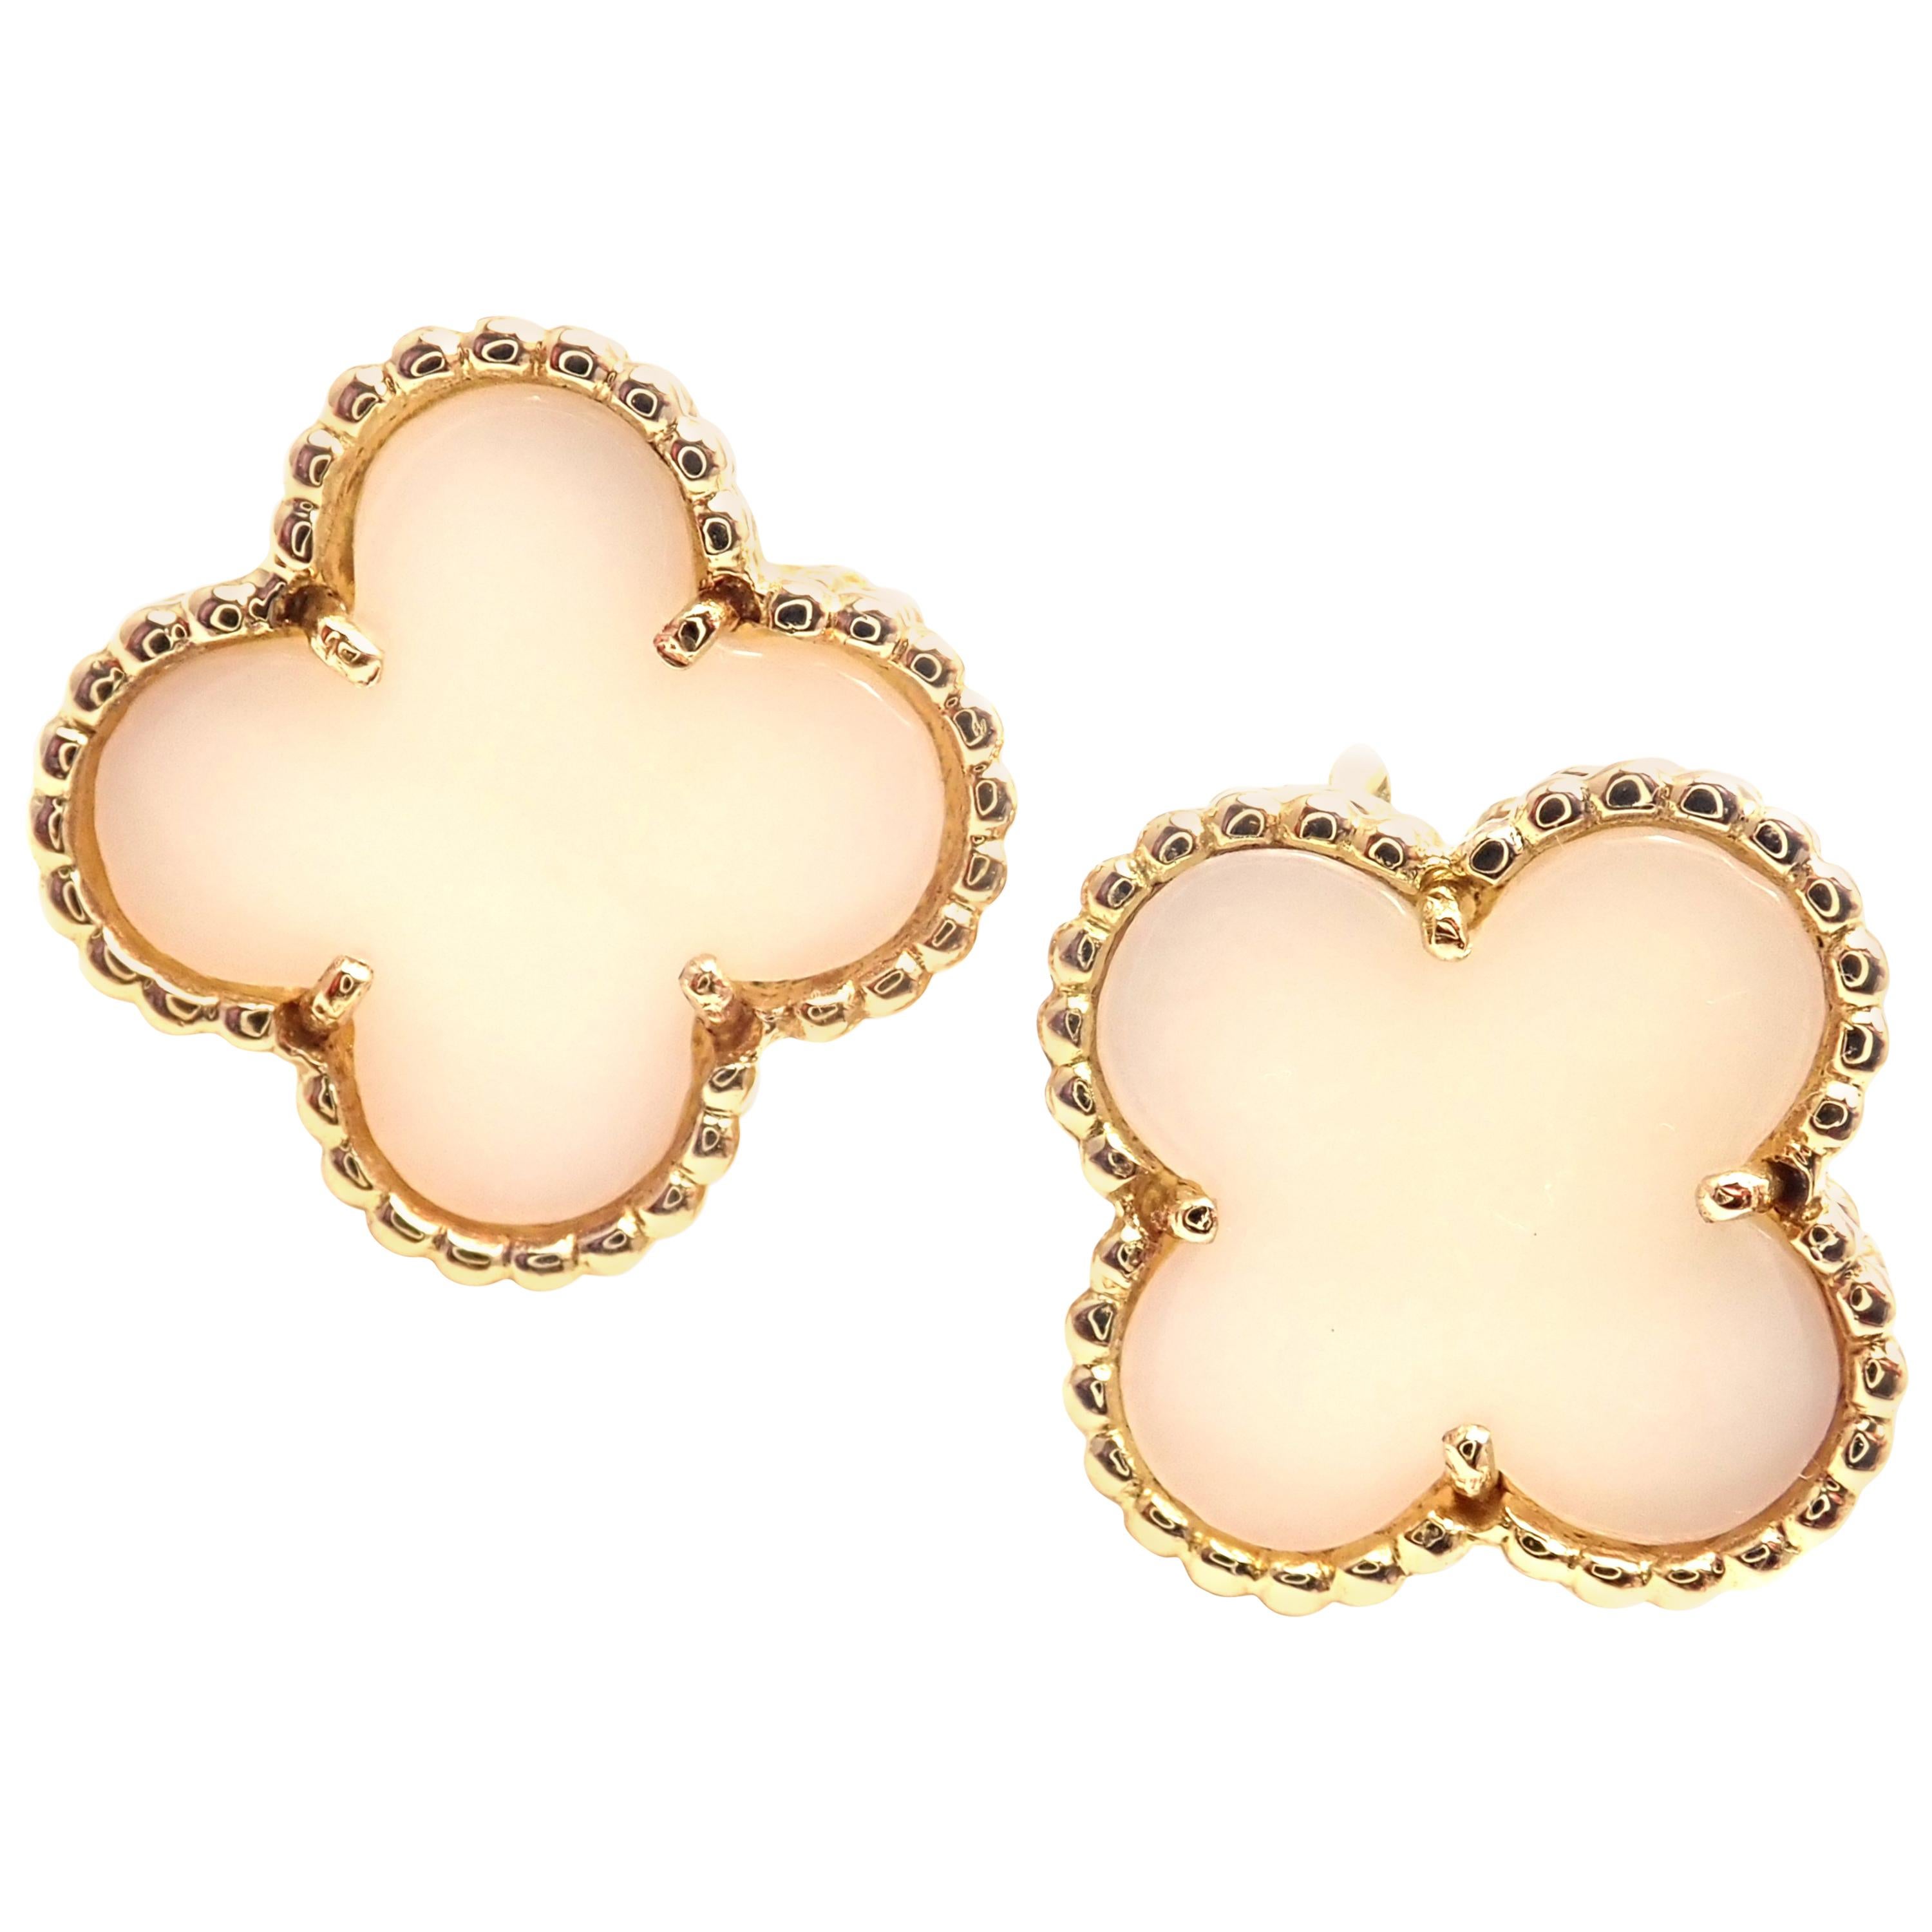 Van Cleef & Arpels Vintage Alhambra White Coral Yellow Gold Earrings